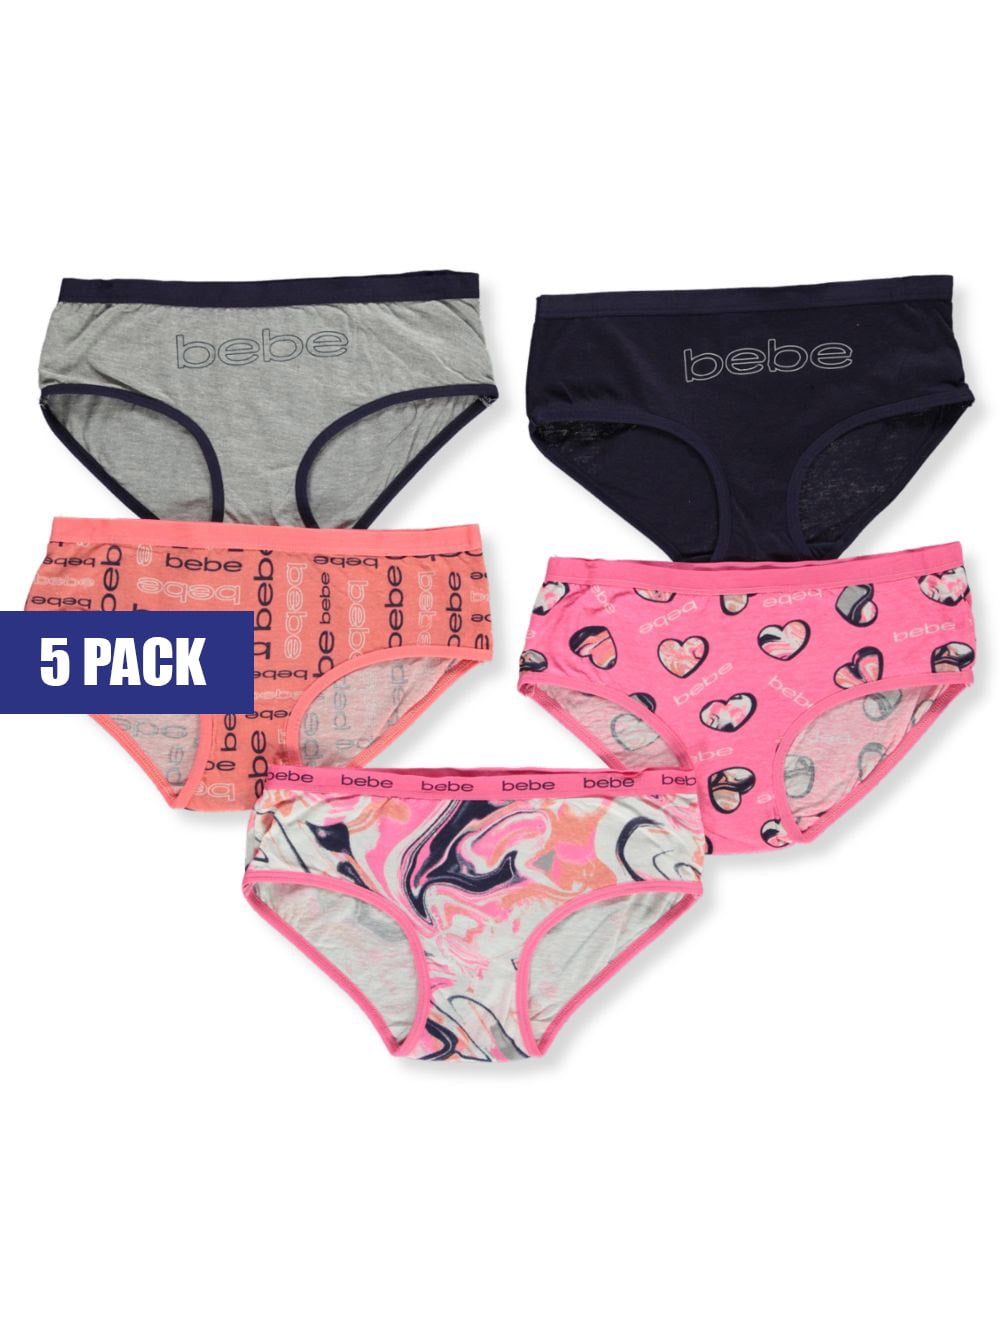 Bebe Girls' 5-Pack Underwear - hot pink multi, 12 - 14 (Big Girls) 